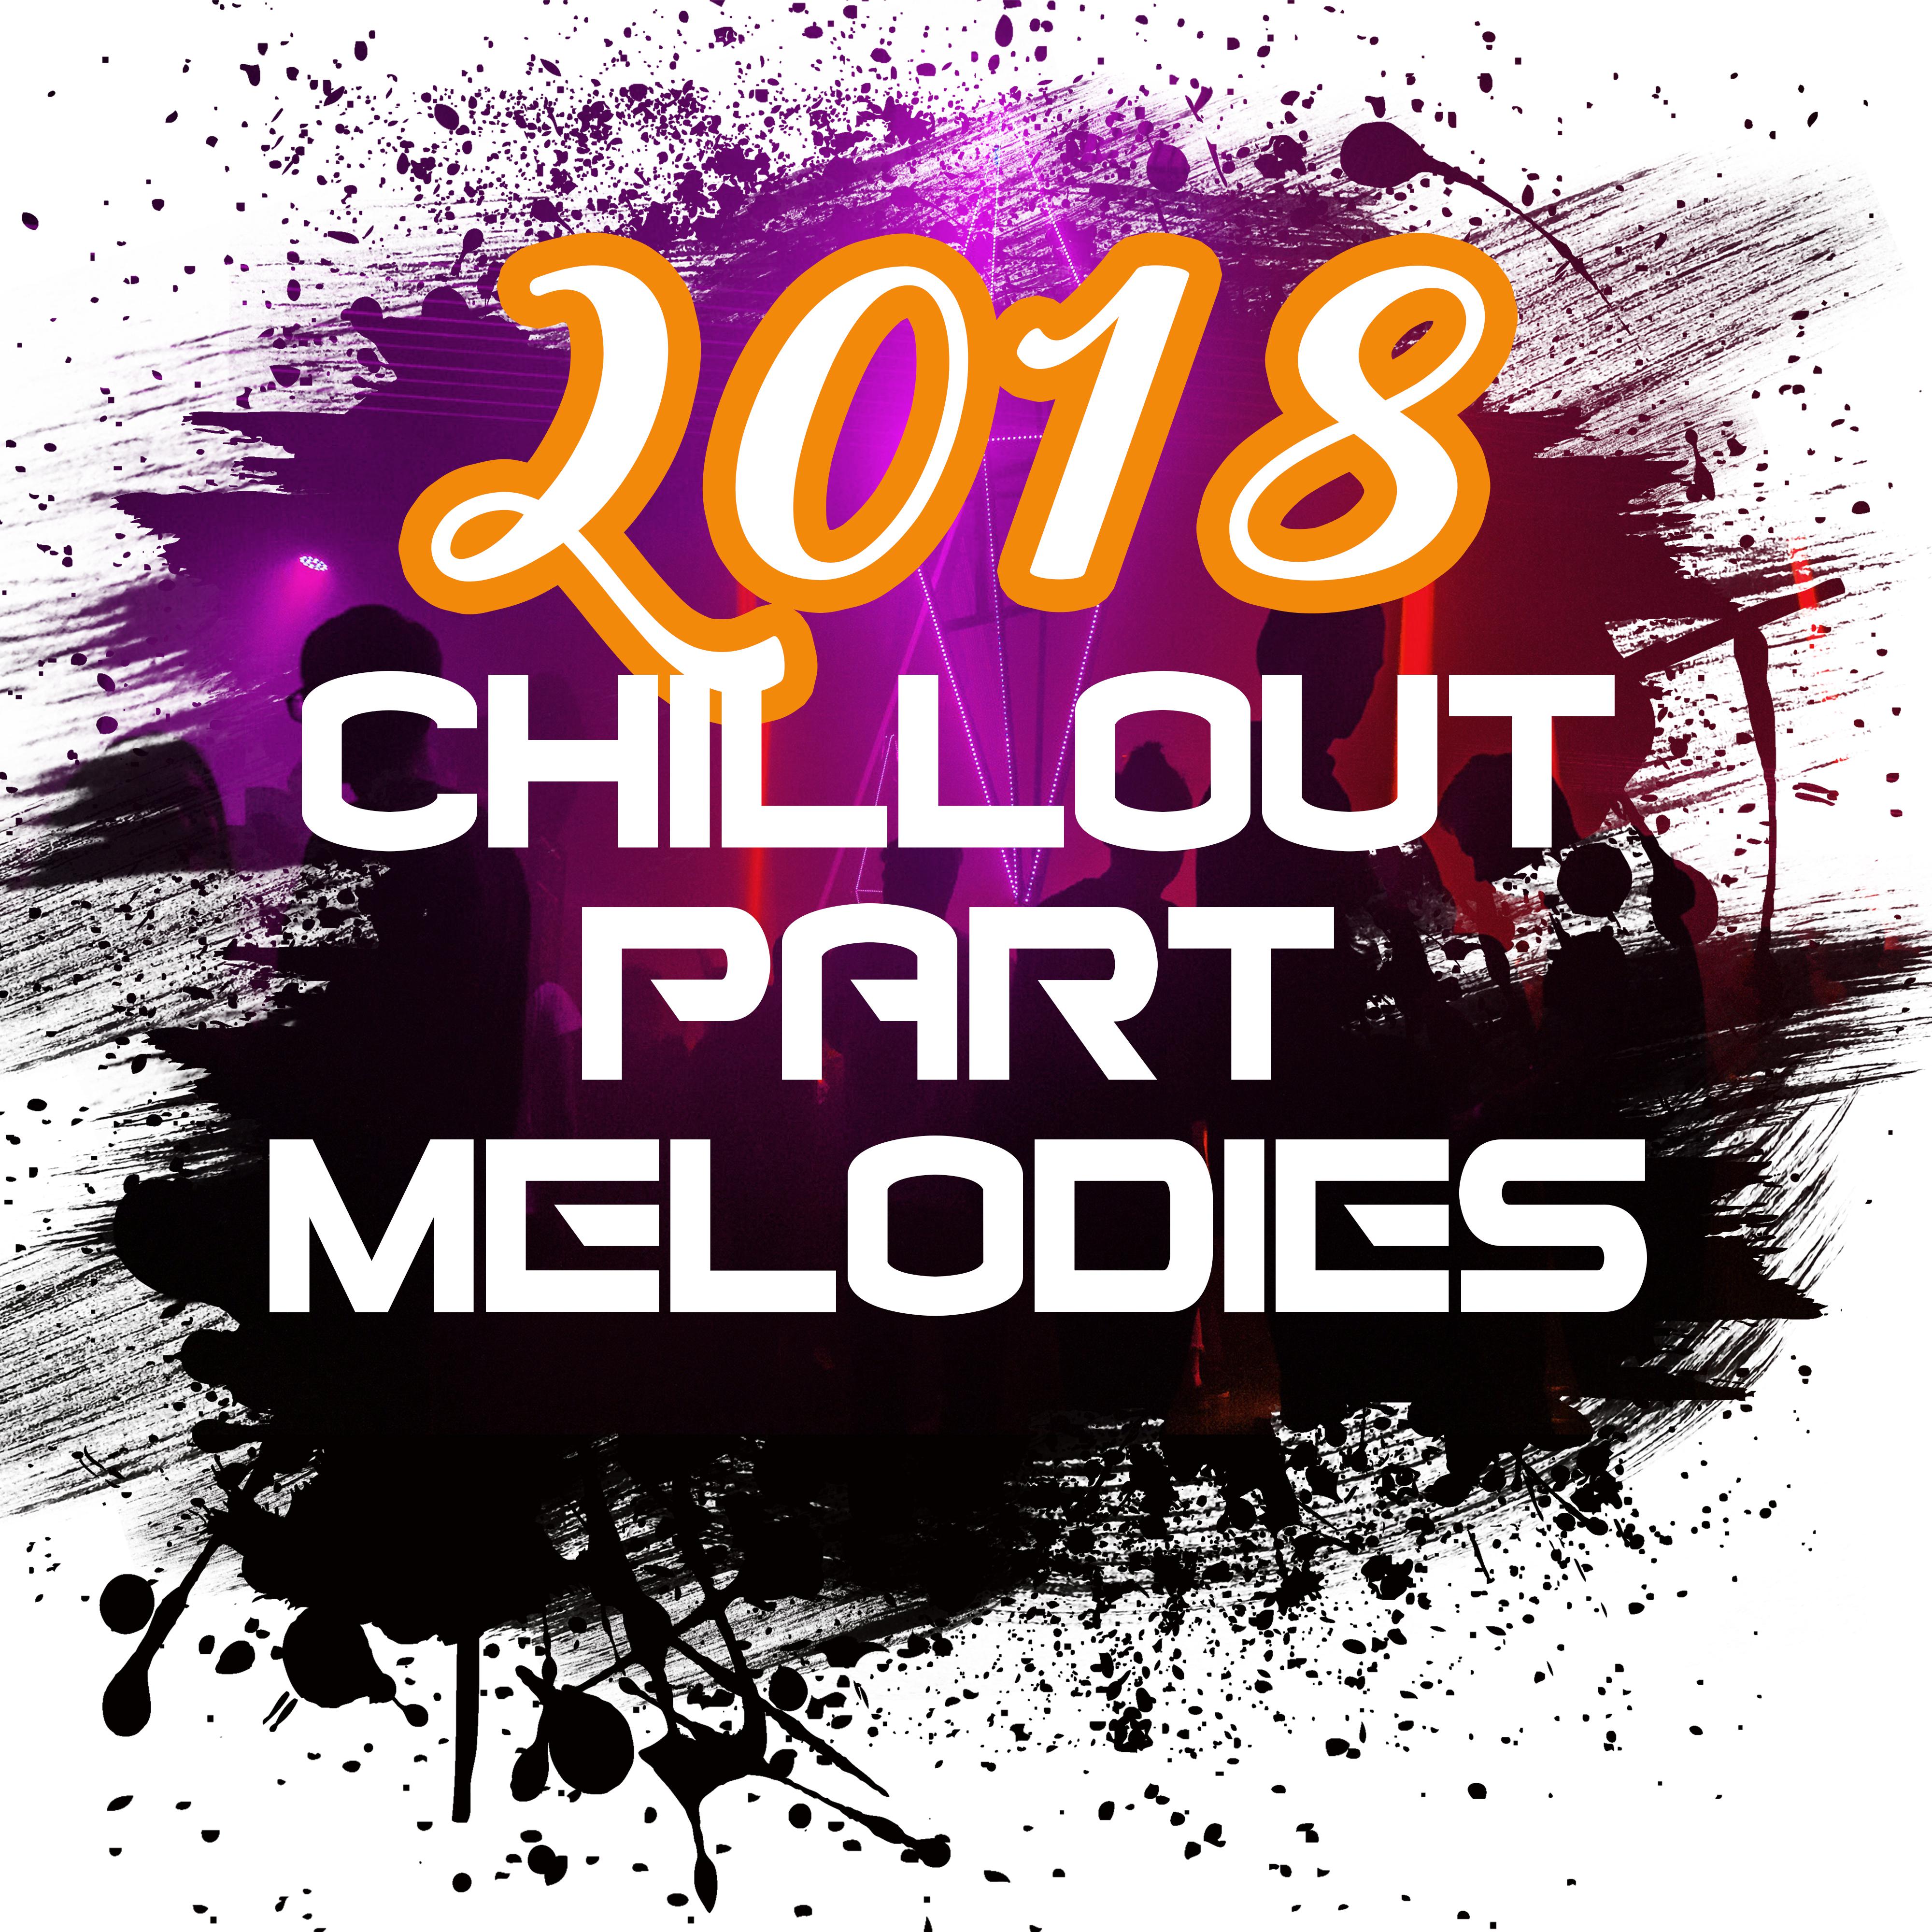 2018 Chillout Part Melodies